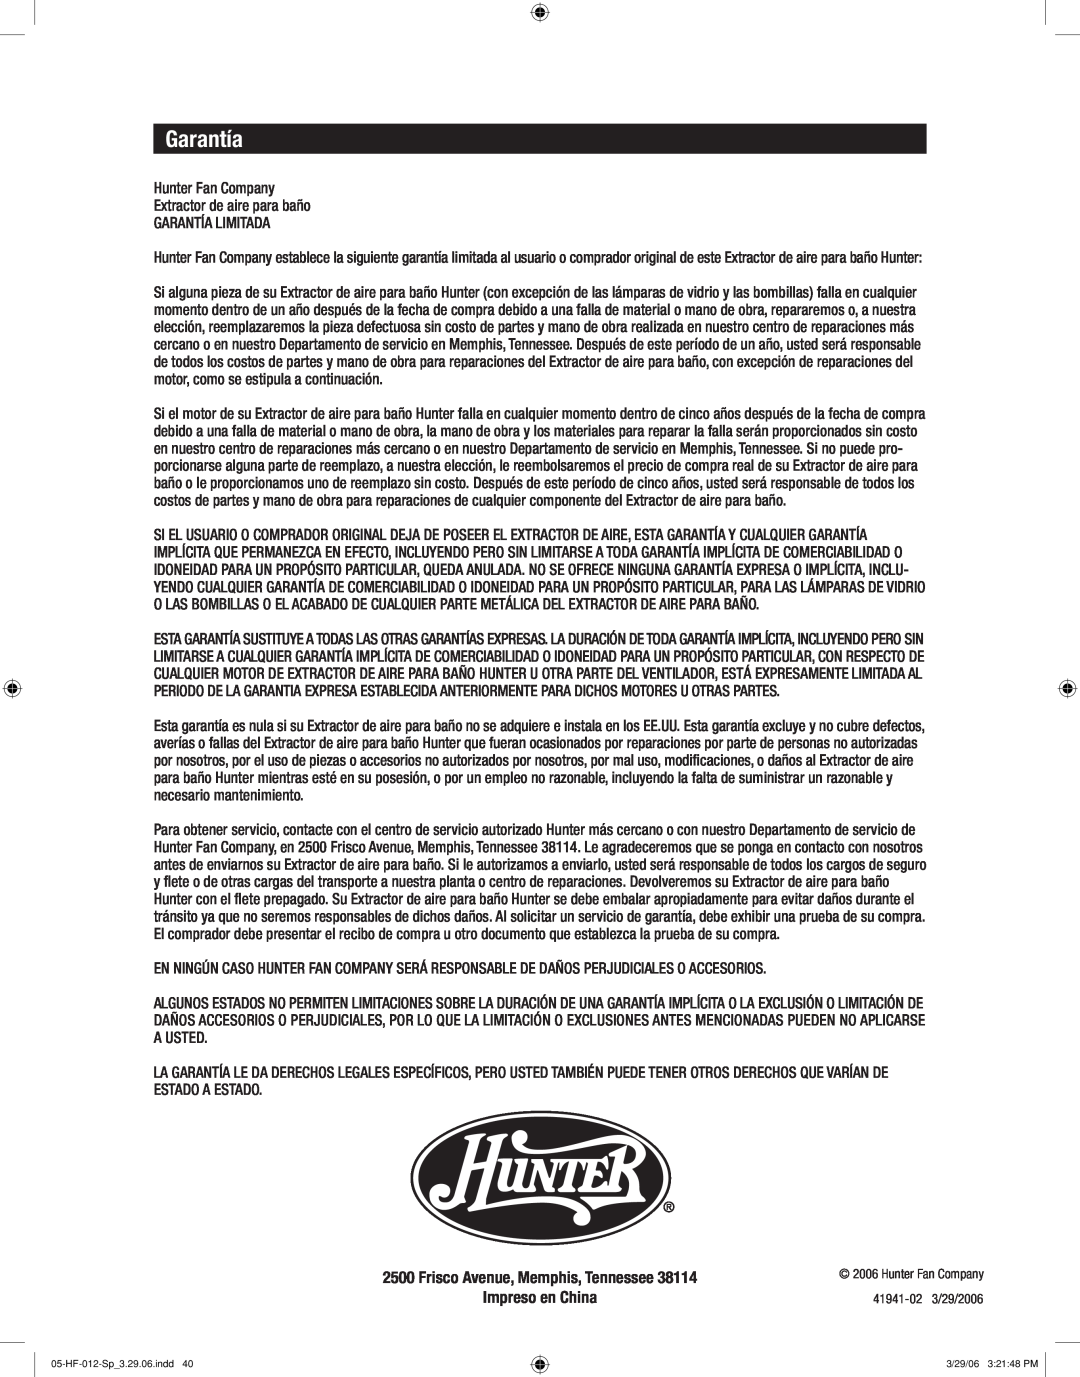 Hunter Fan 82001, 82007 manual Garantía, Frisco Avenue, Memphis, Tennessee Impreso en China 